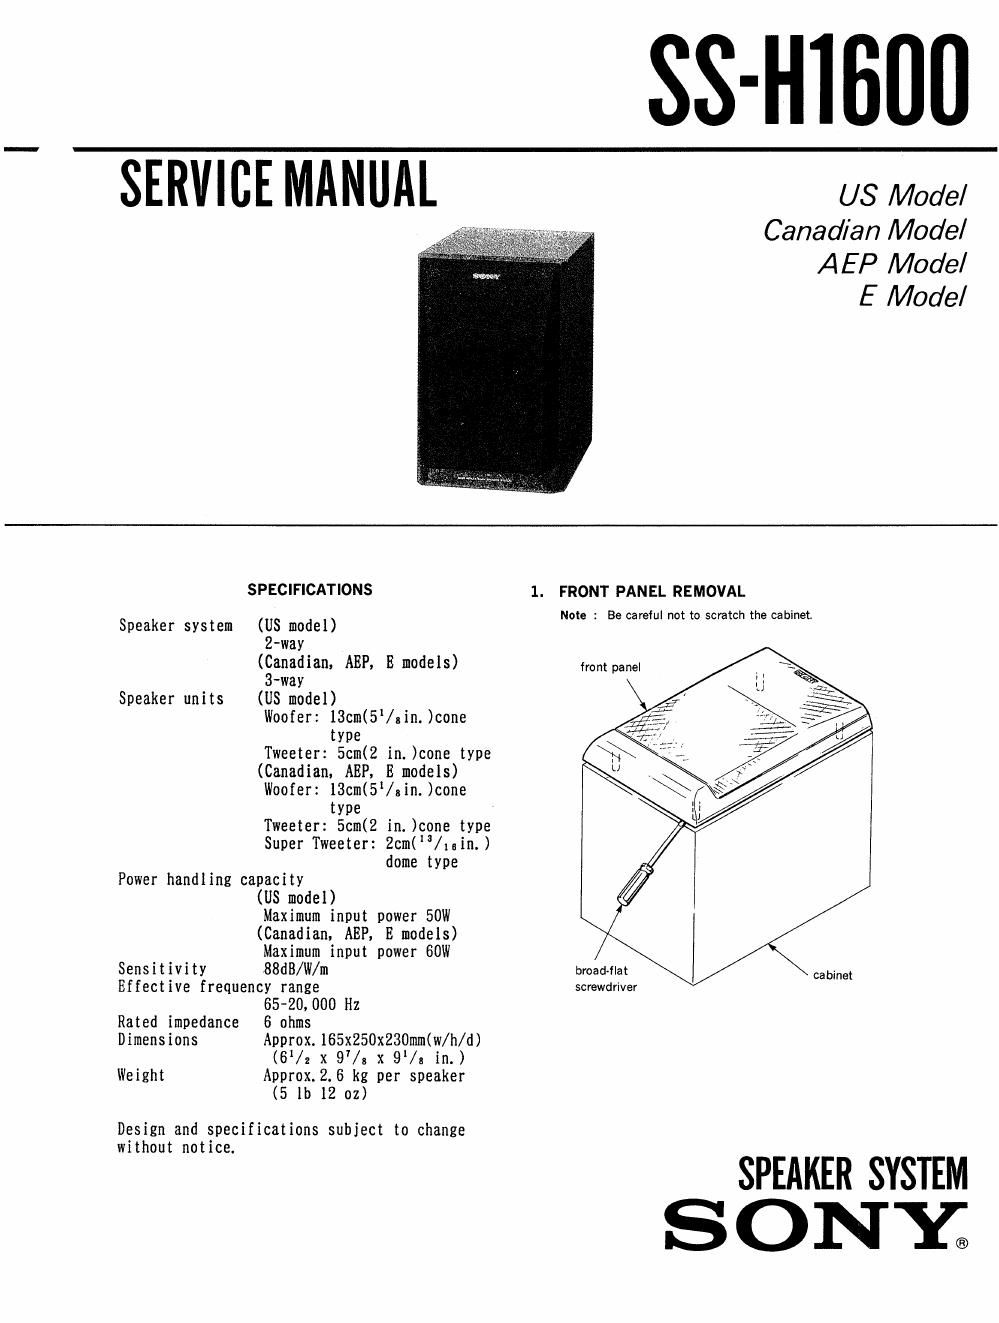 sony ss h 1600 service manual